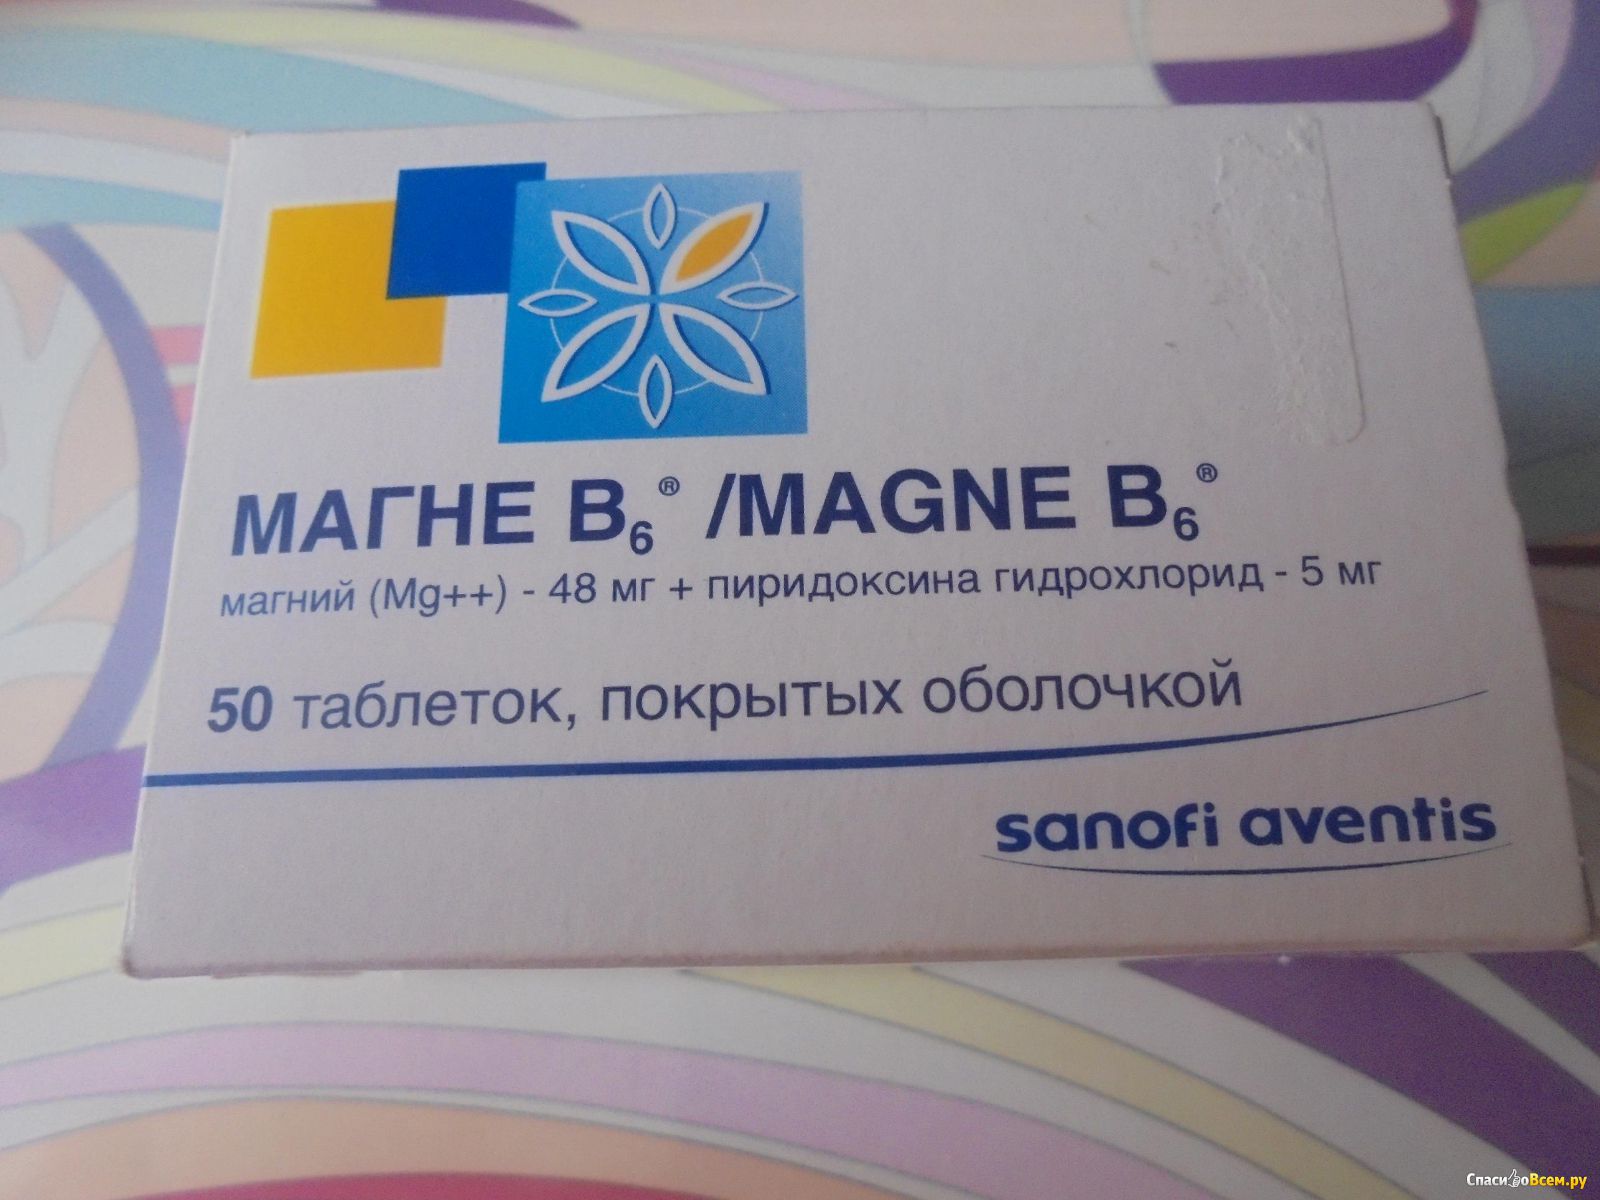 Магне b6 премиум (Magne b6 Premium). Магне b6 вьетнамский. Magne + b6 капсулы. Магний б6 порошок.